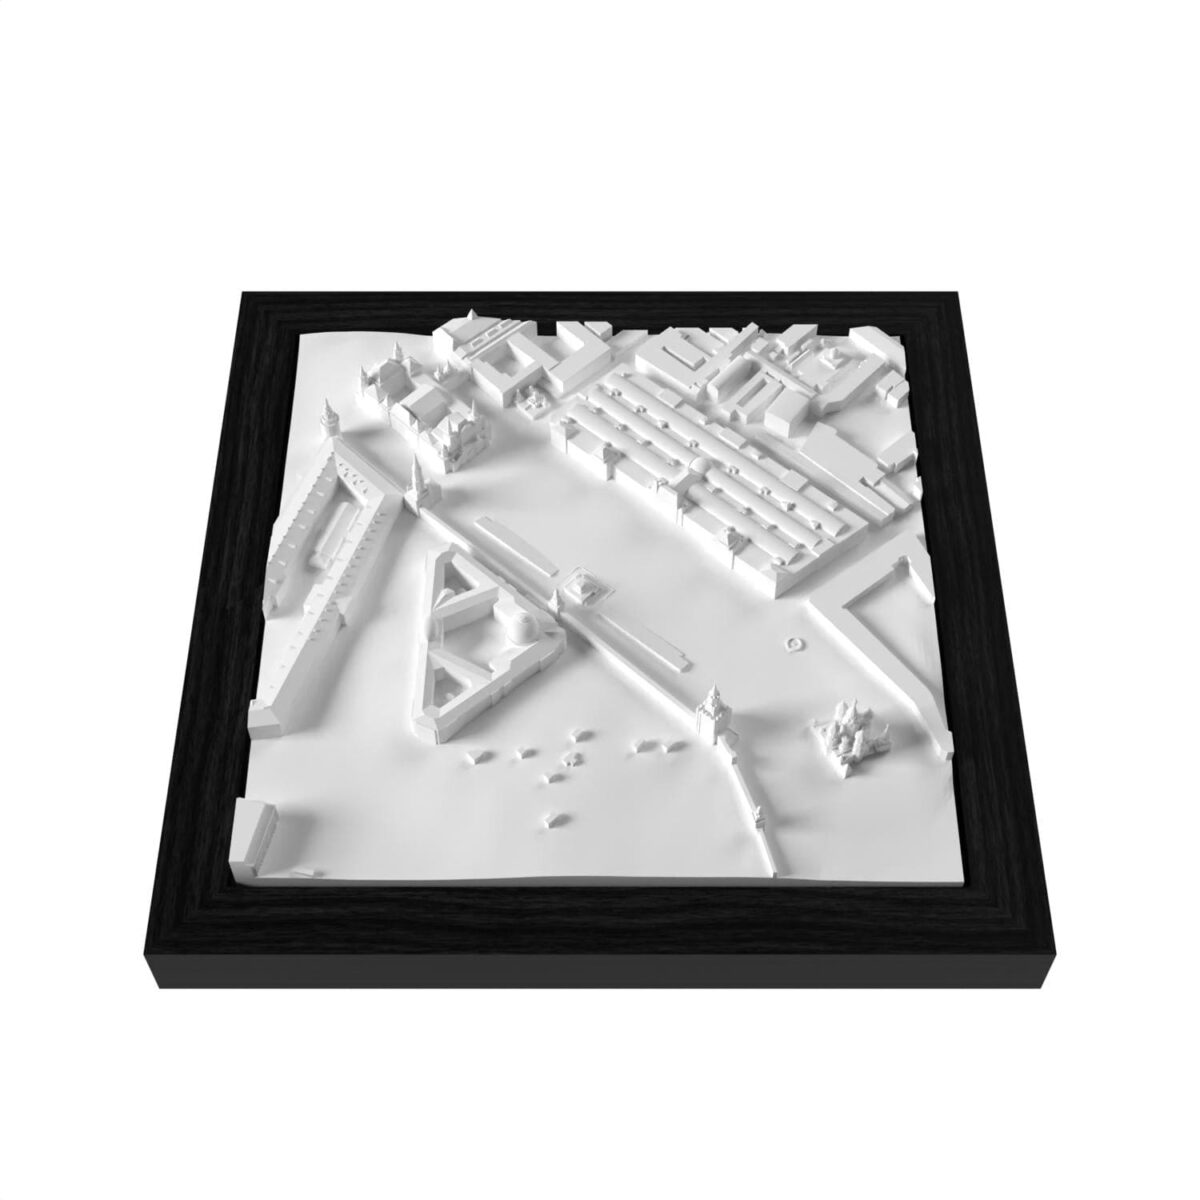 Daedalus Designs - Cityframes Moscow 3D City Map Sculpture - Review